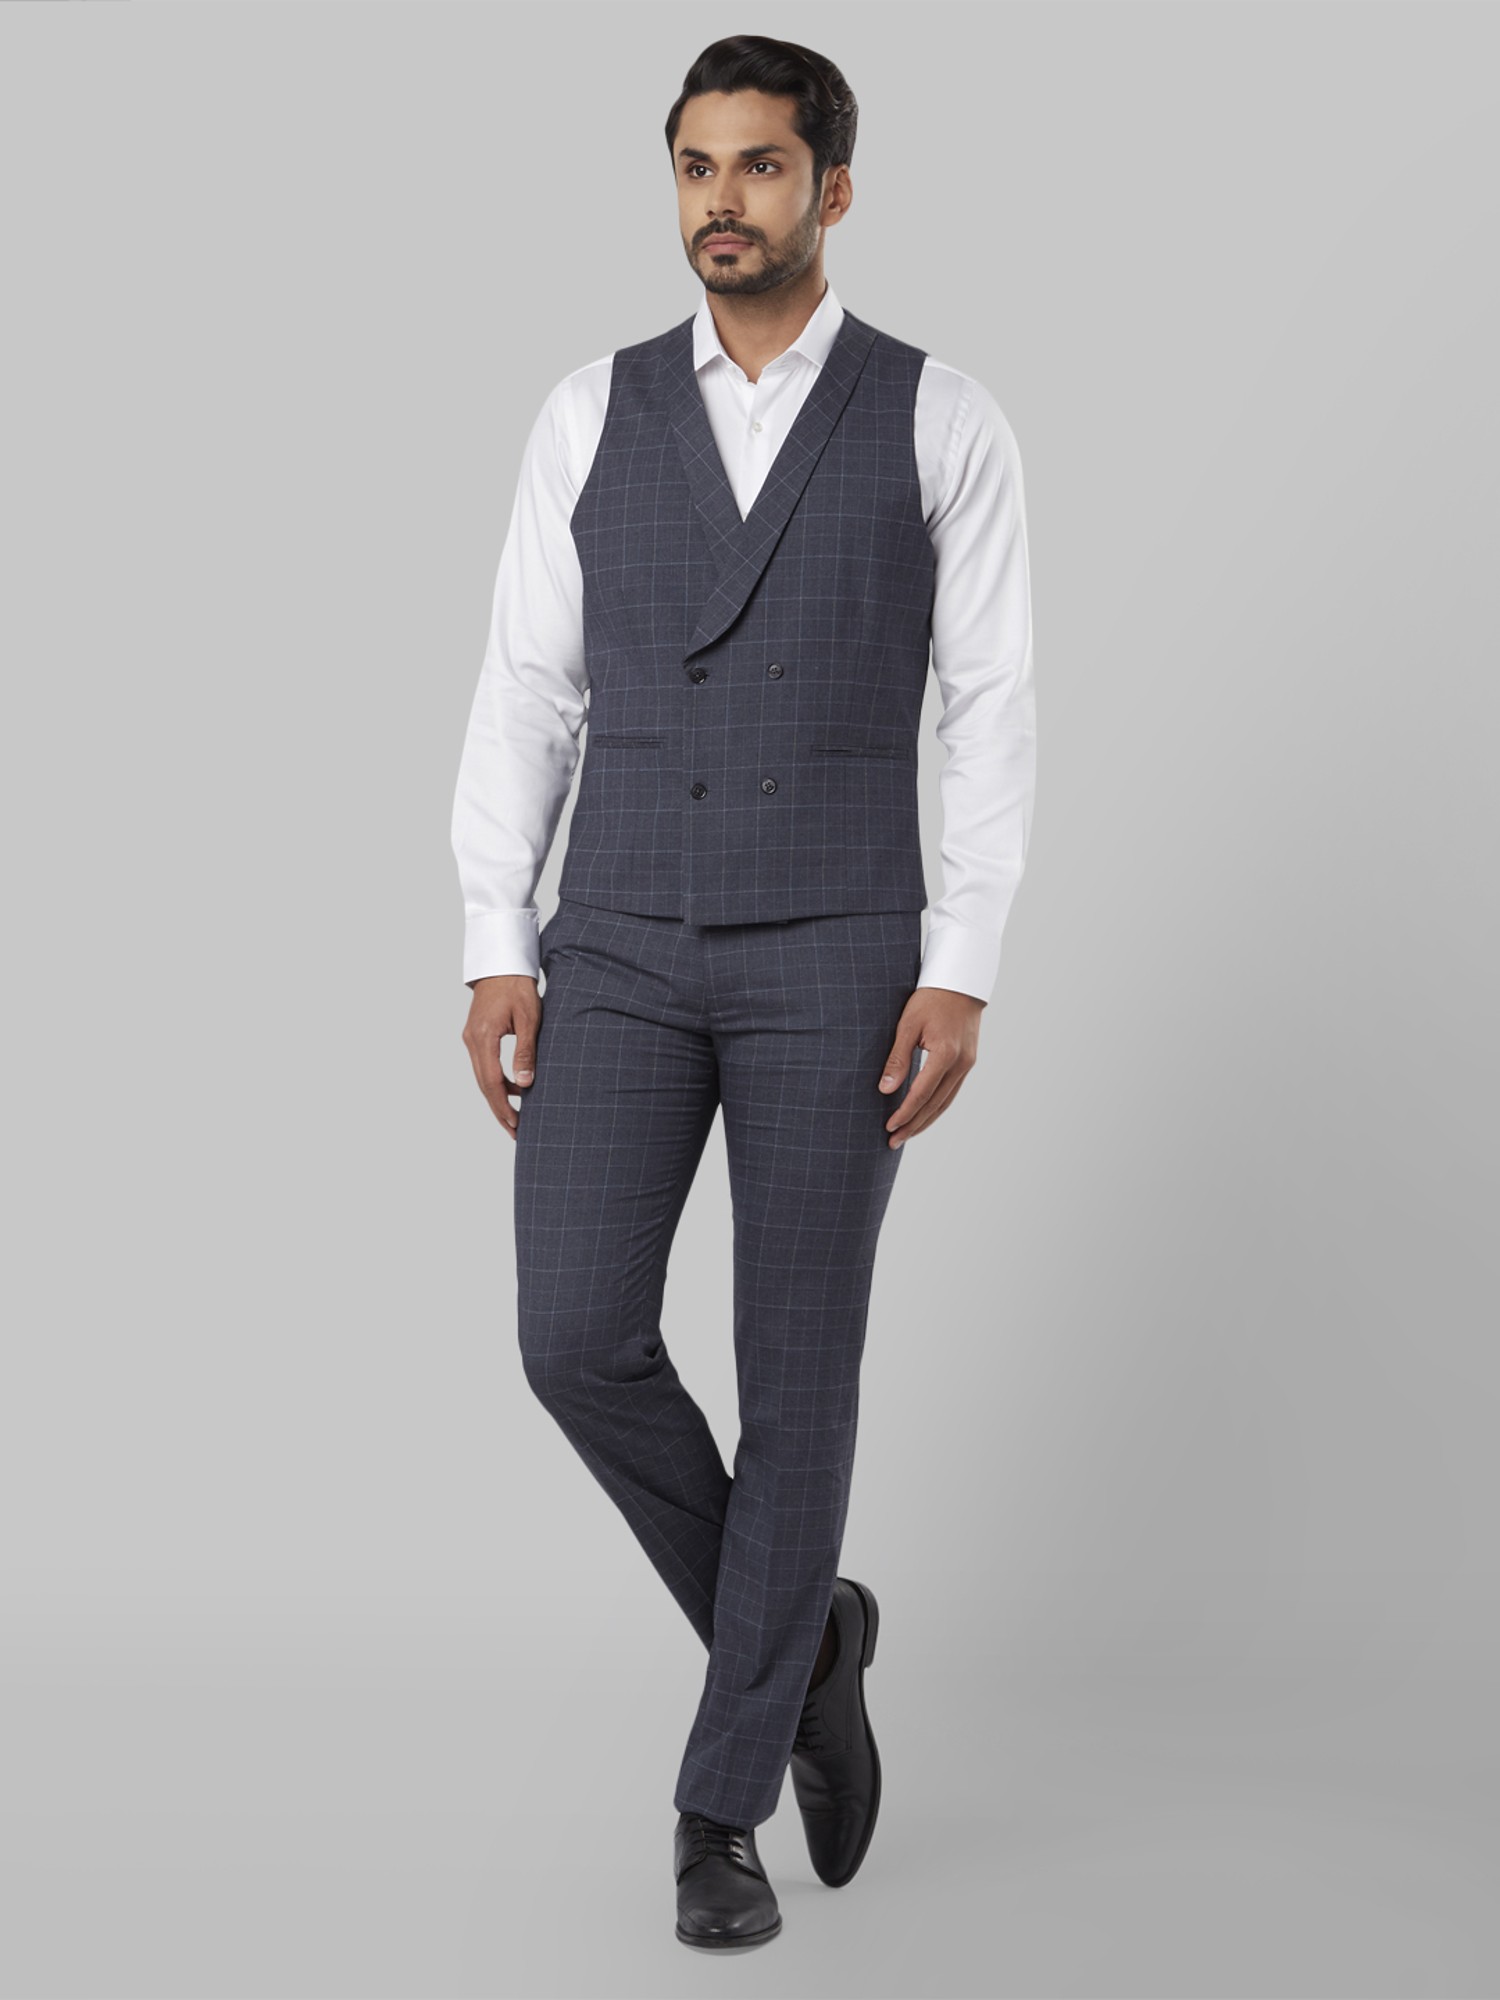 Burton Menswear  Mens Clothing  Specialist Suits  Grey vest groomsmen  Groom and groomsmen suits Navy blue tie